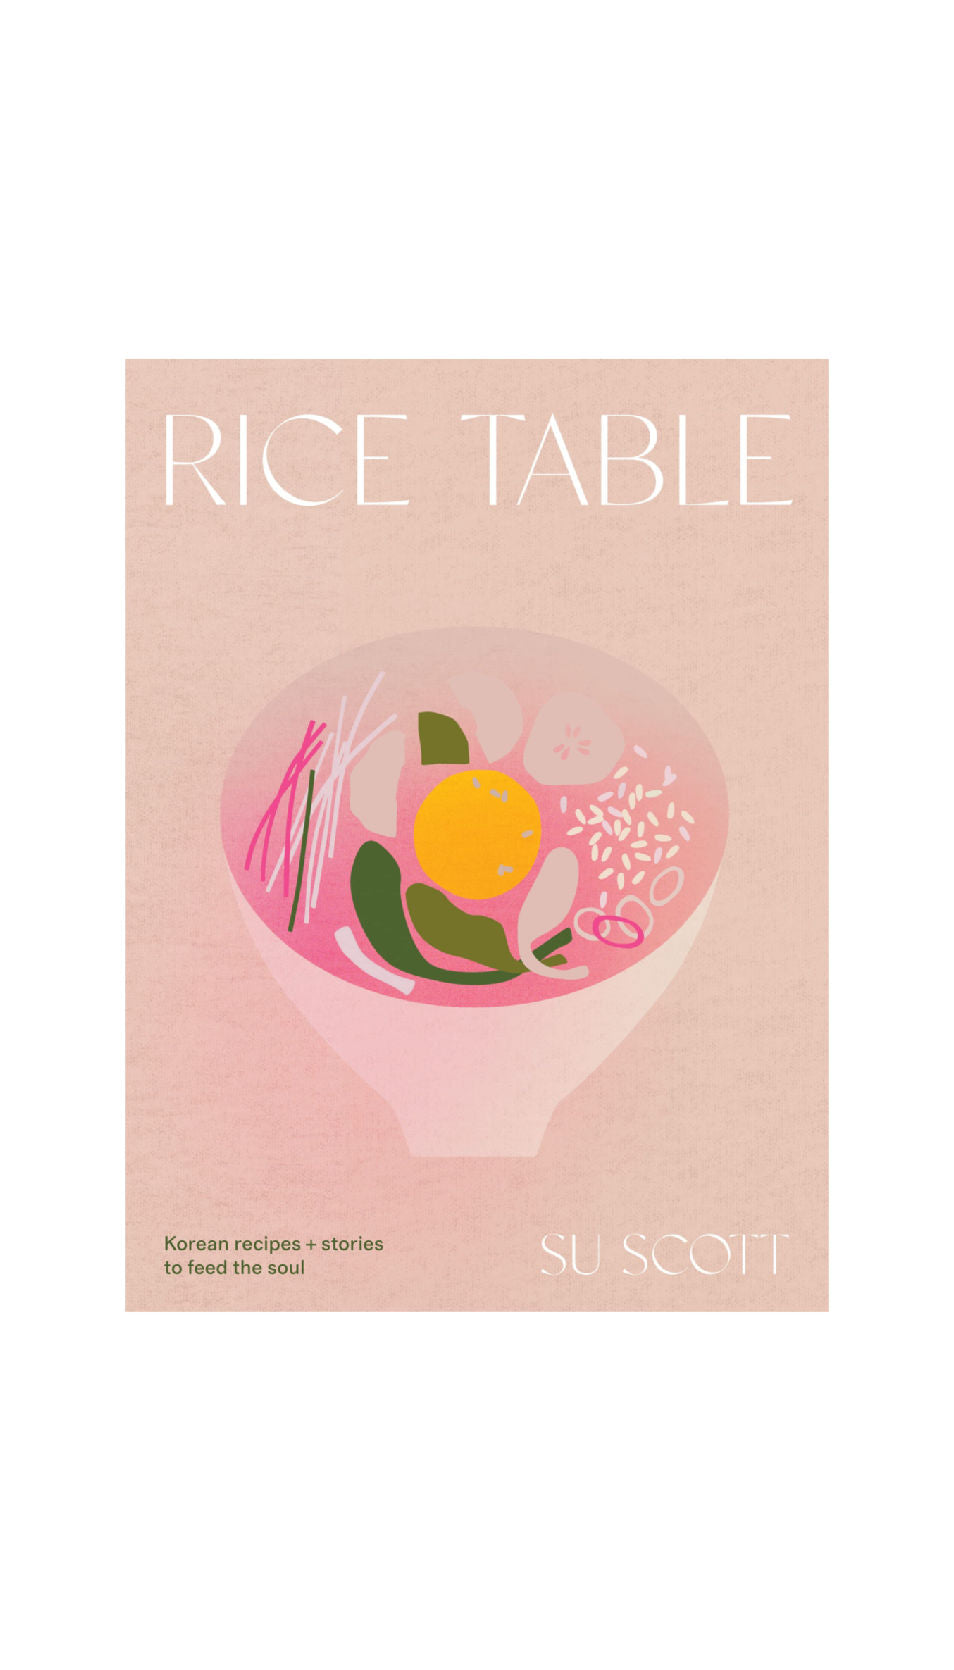 Rice Table / SU SCOTT